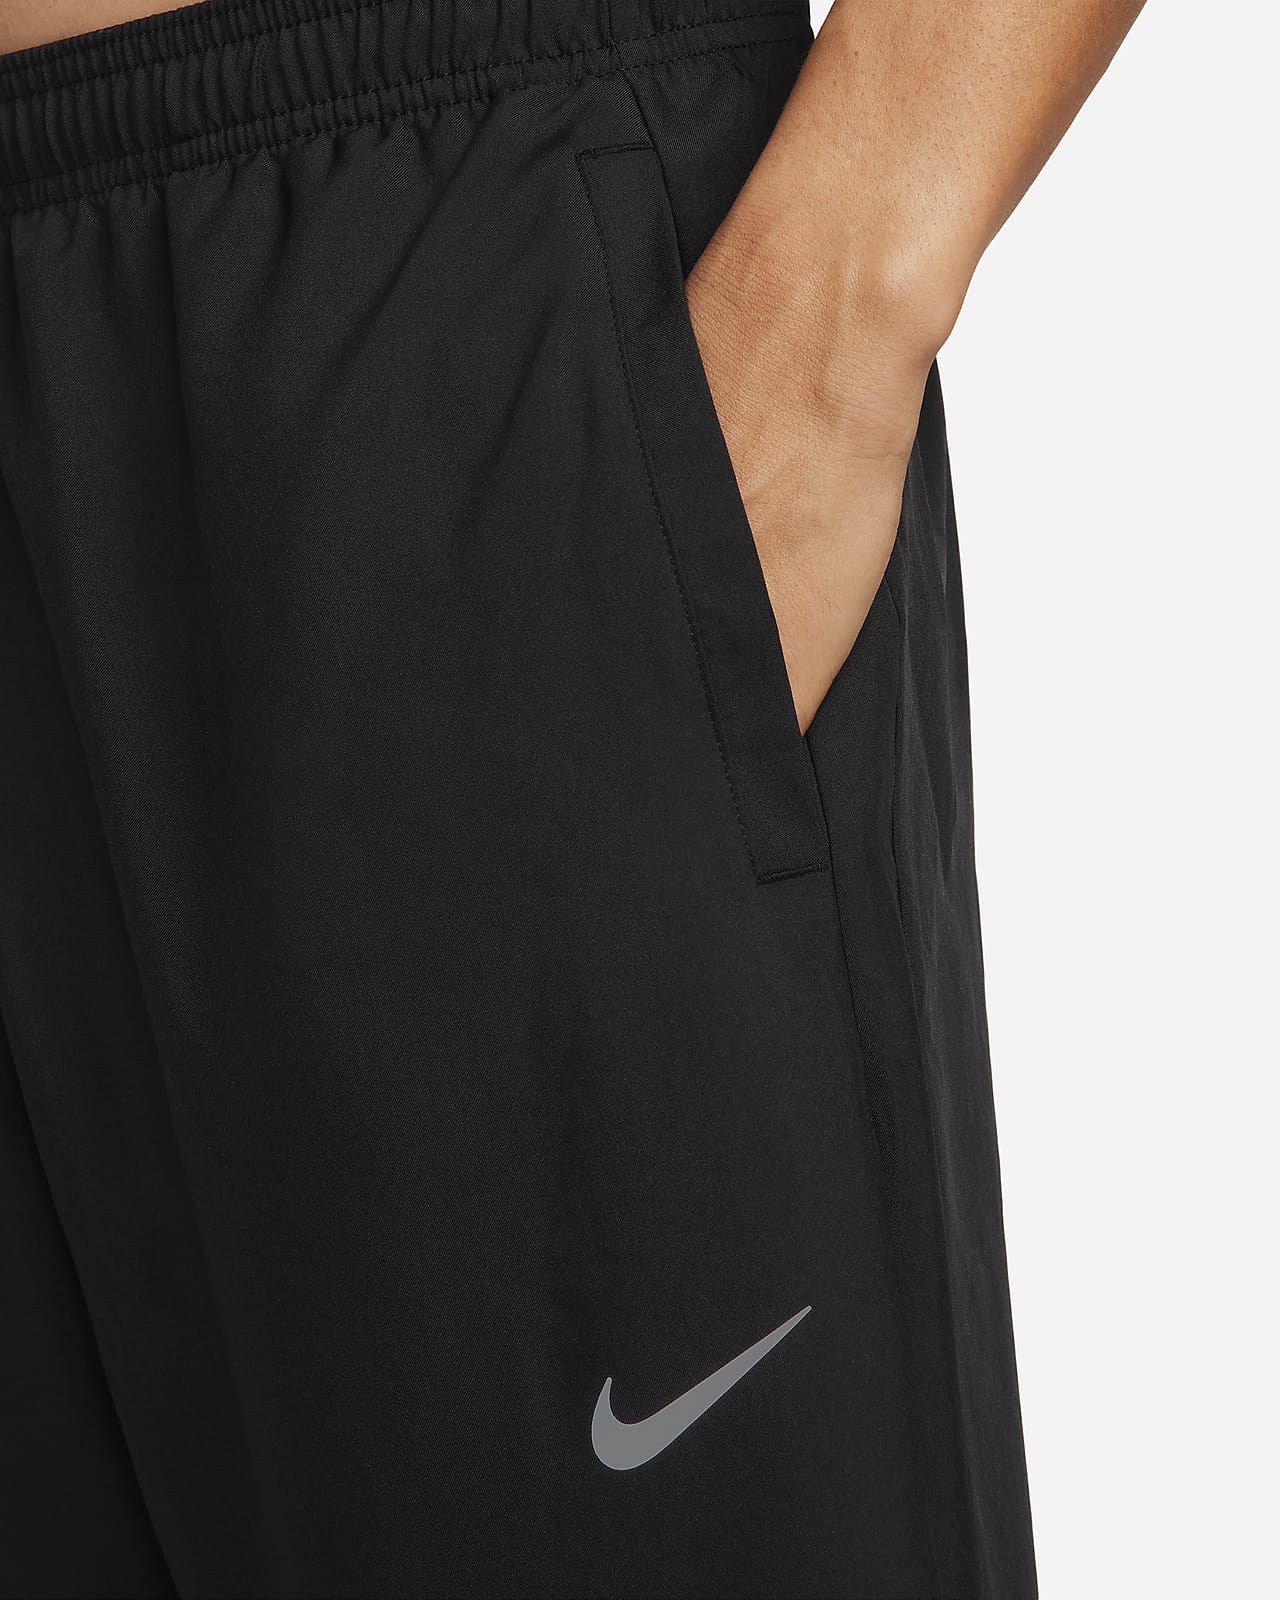 Nike Dri-FIT Challenger Men's Woven Running Pants, Black, X-Large